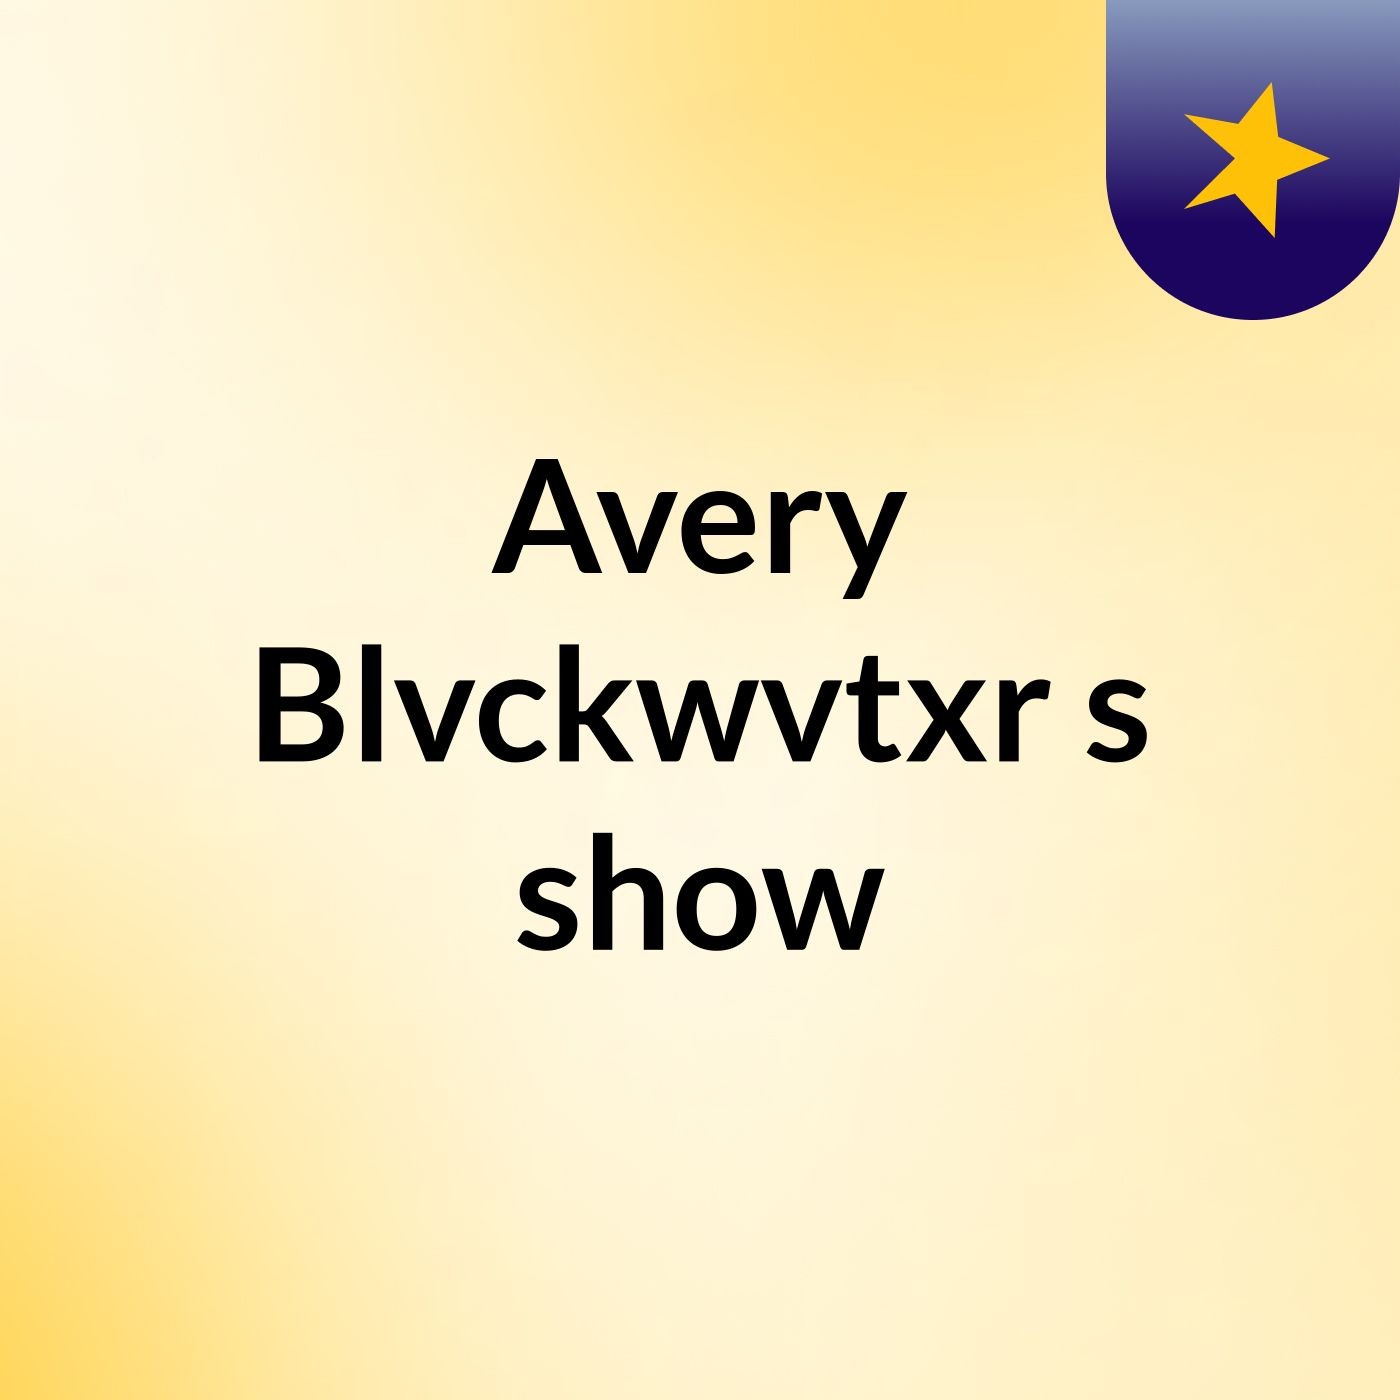 Avery Blvckwvtxr's show